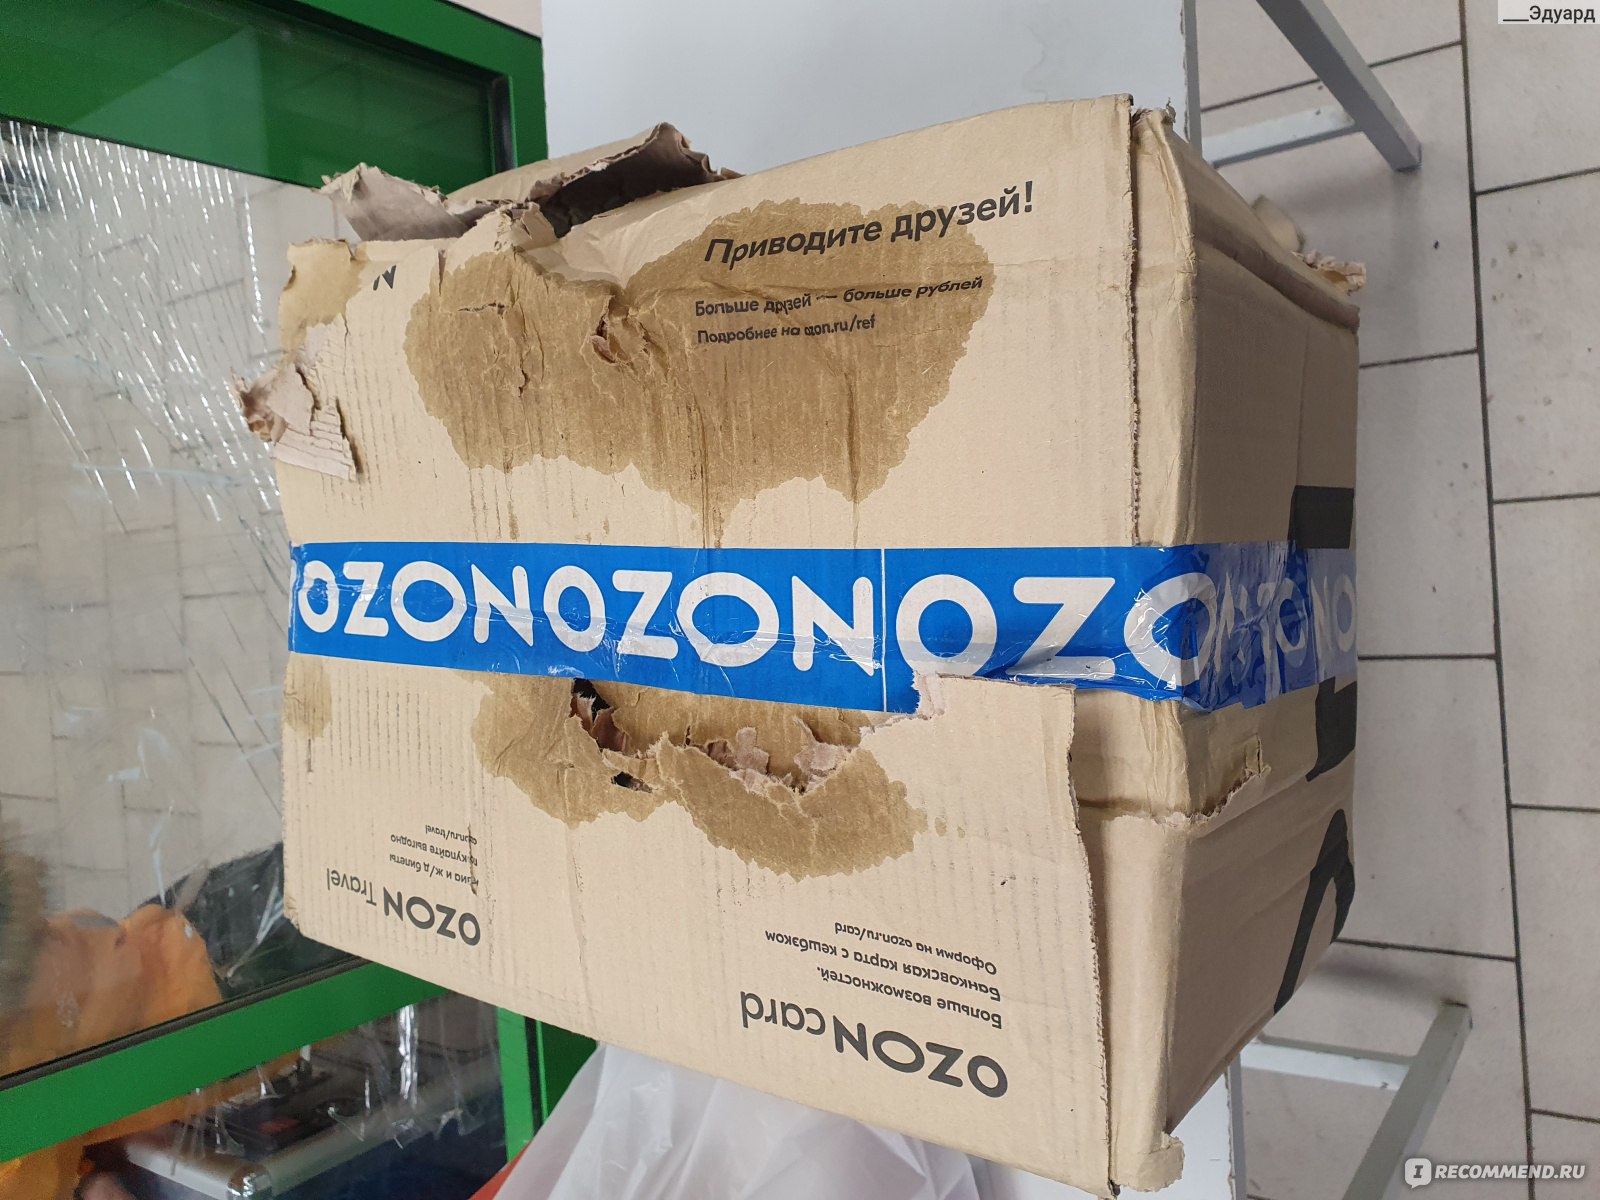 Доставка продуктов на озоне с доставкой. Озон товары. Козон товок. Вещи с озона. Озон продукты.